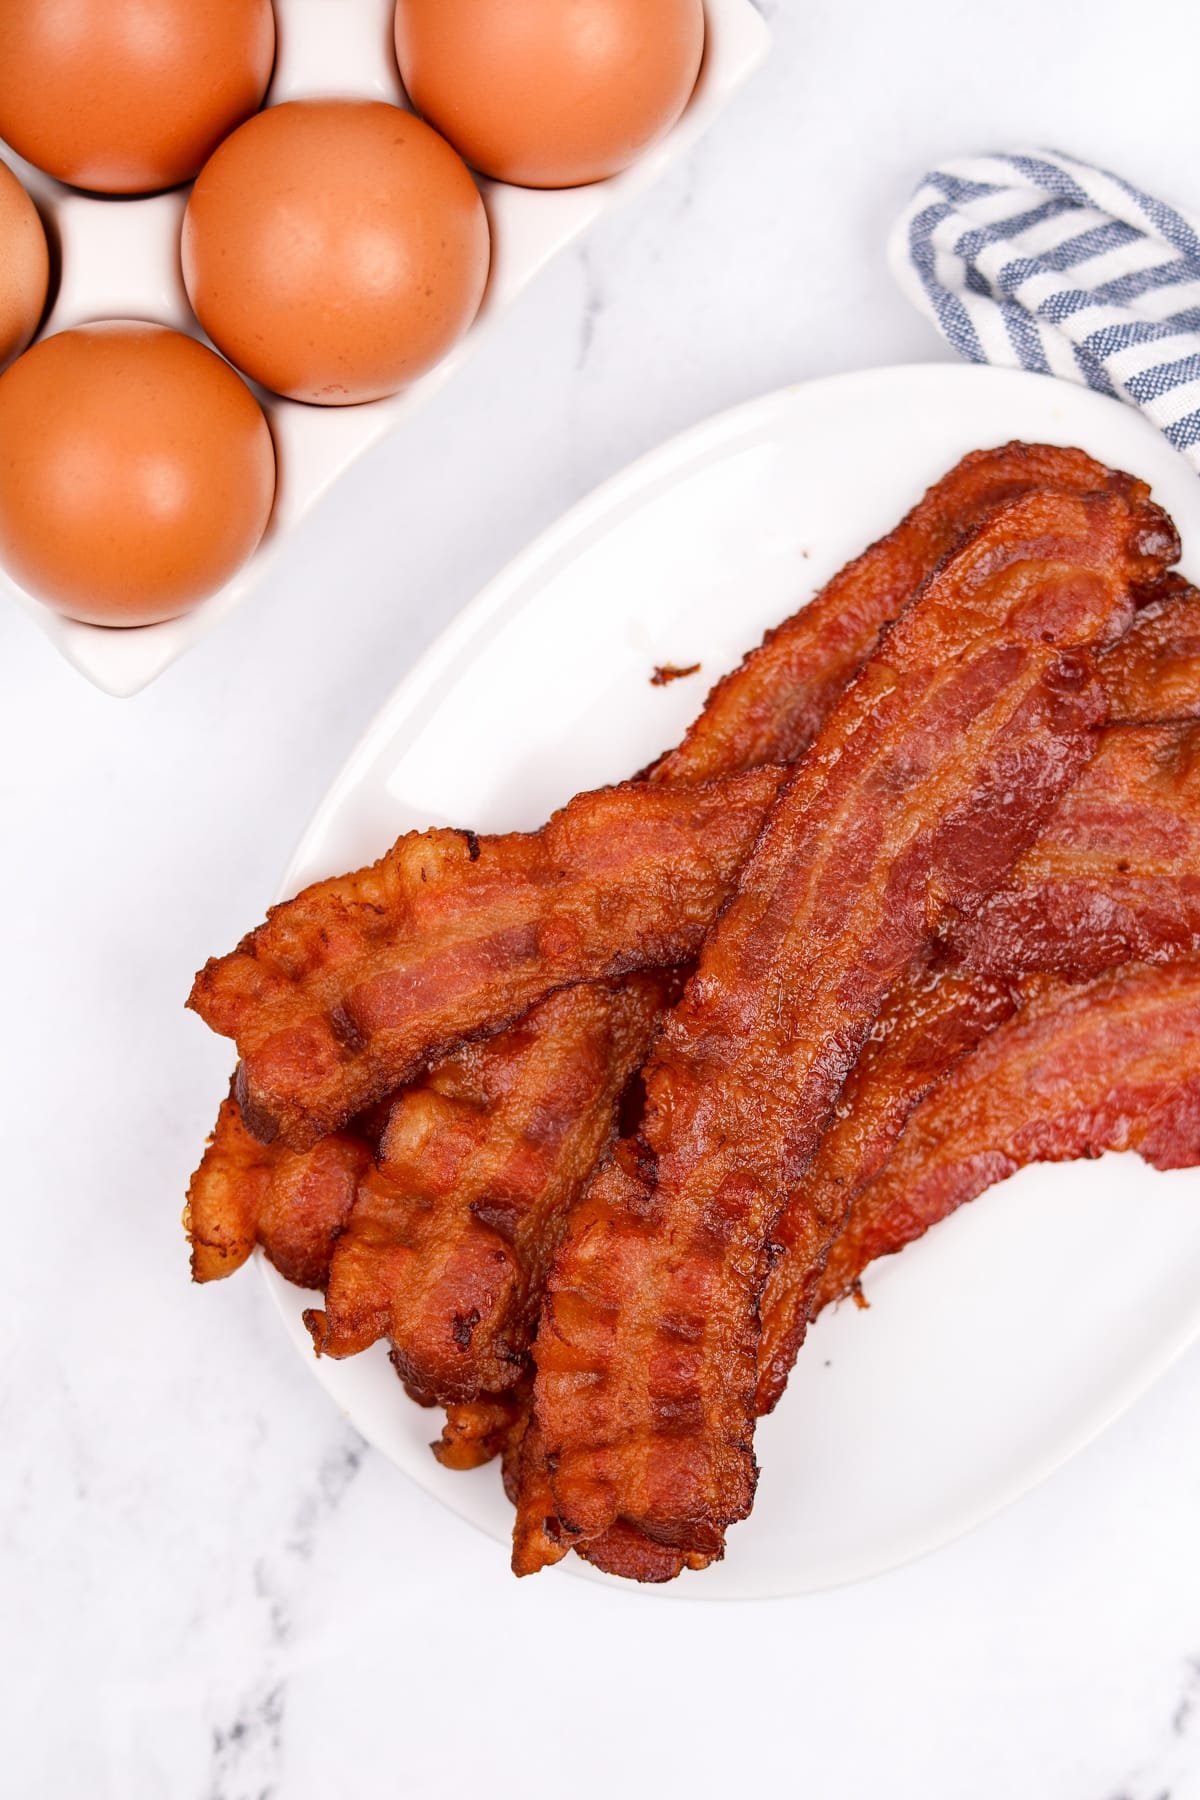 Crispy bacon on a white plate.